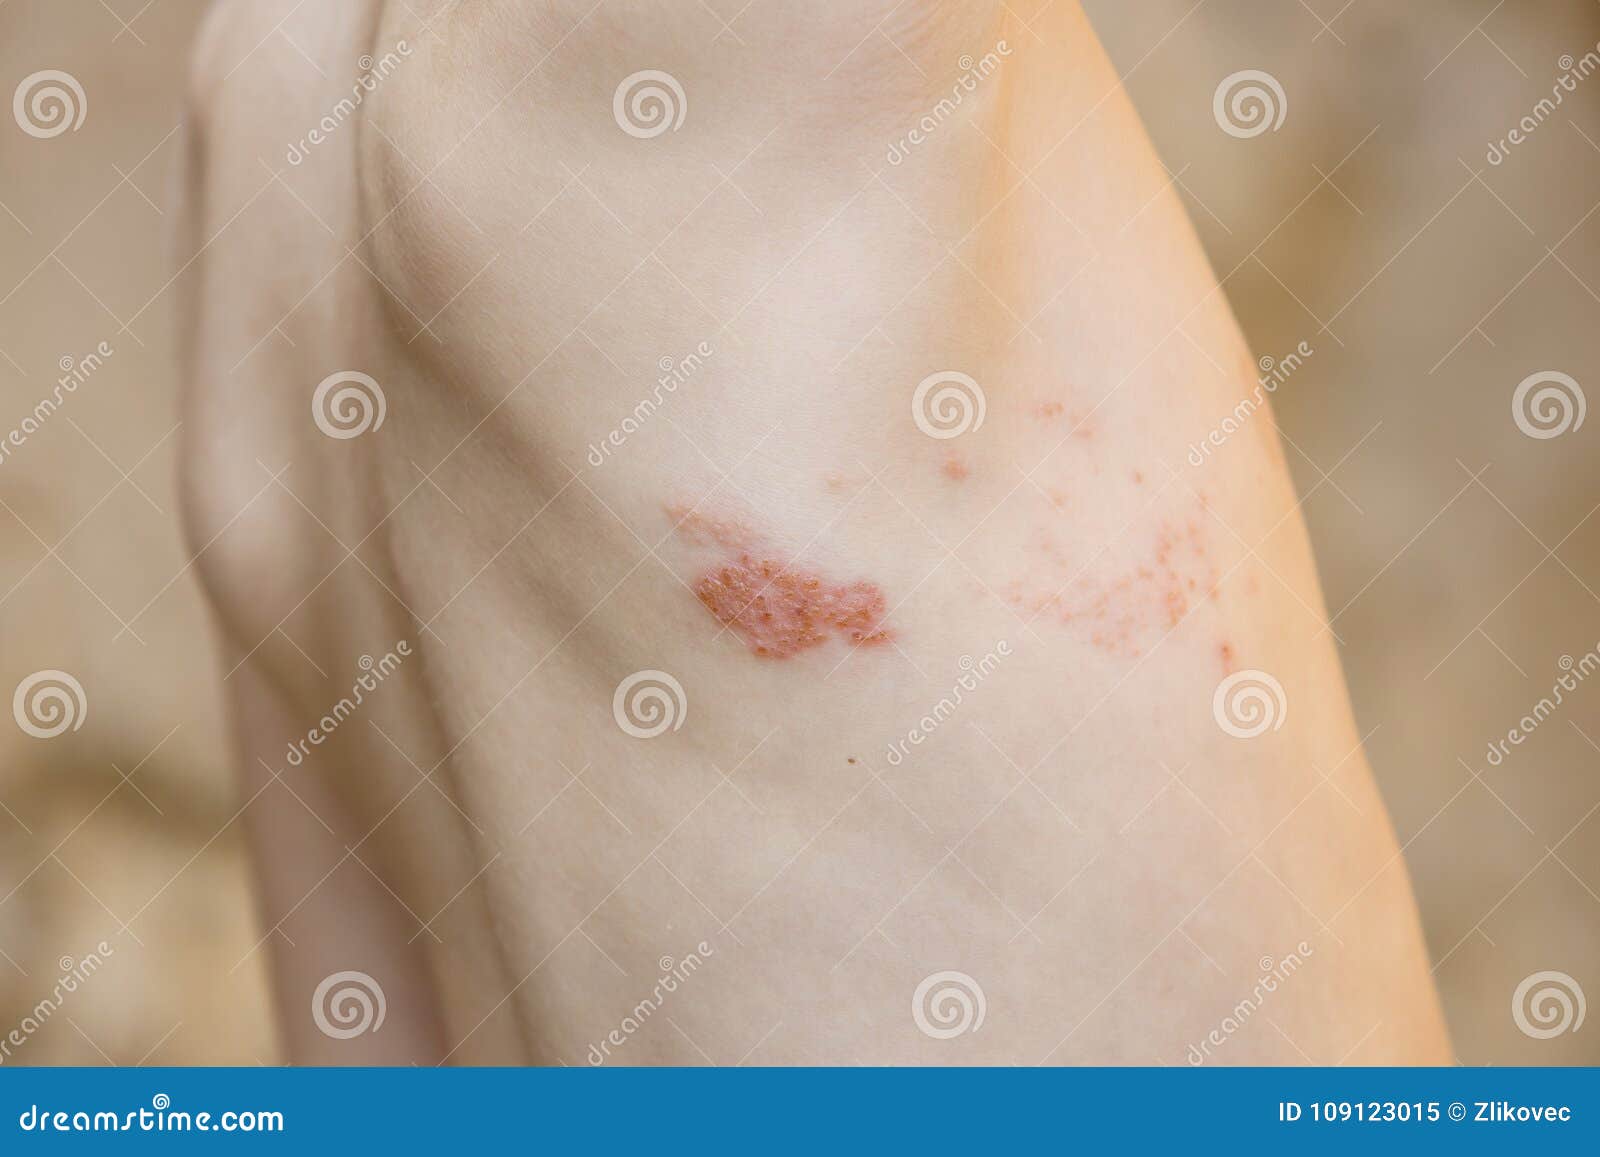 symptom of herpes zoster shingles